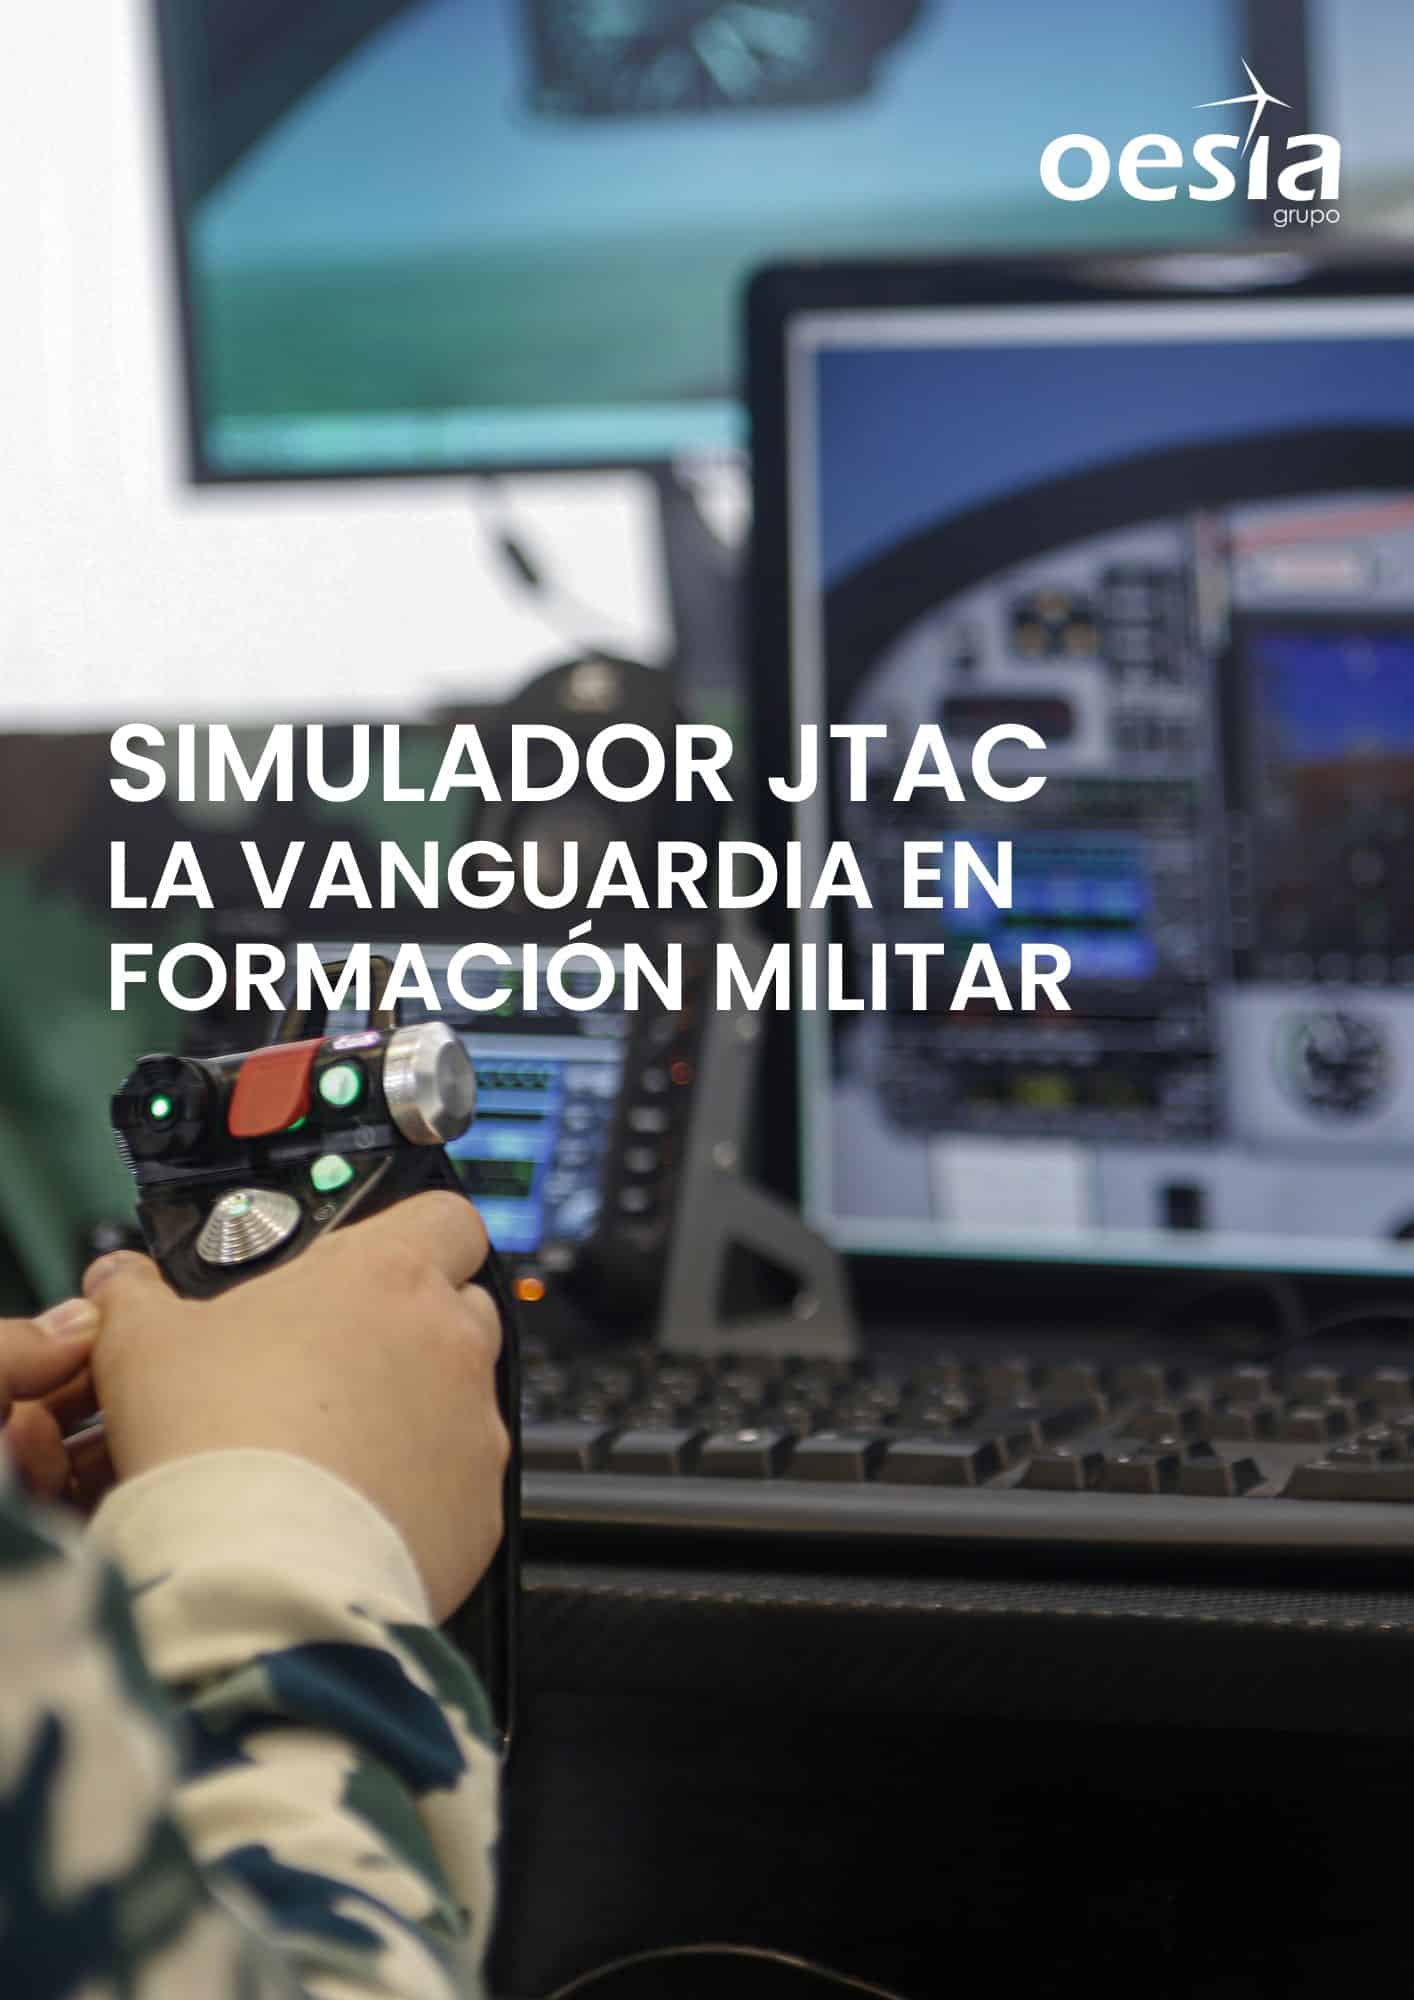 jtac simulator